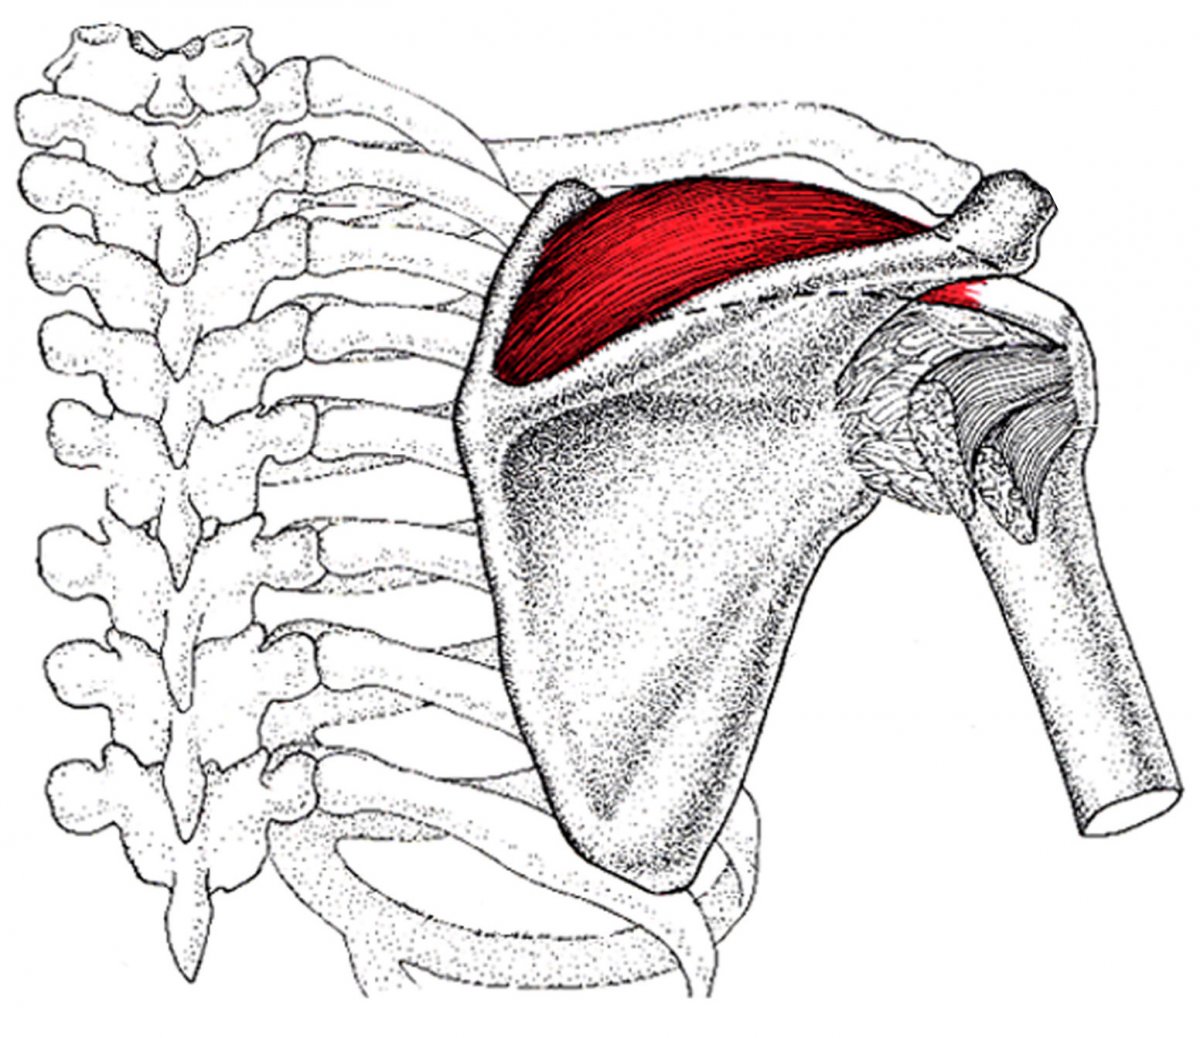 Ротаторная манжета плеча анатомия